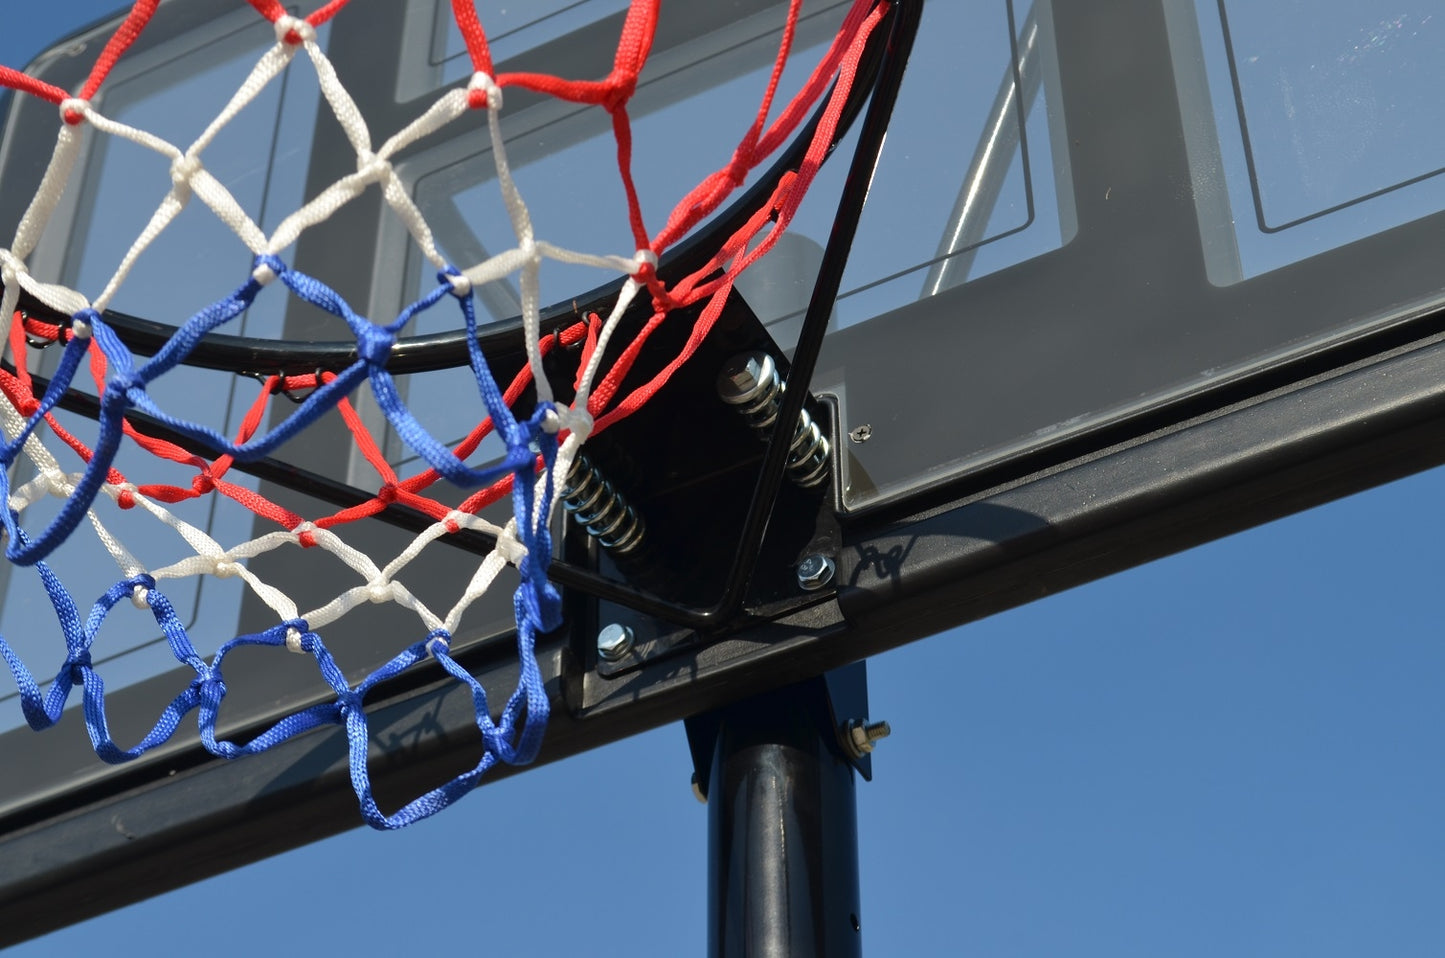 Adjustable 1.5m-3.05m Portable Kids Basketball Hoop System Stand Hoop Net Ring Rim Outdoor Sports